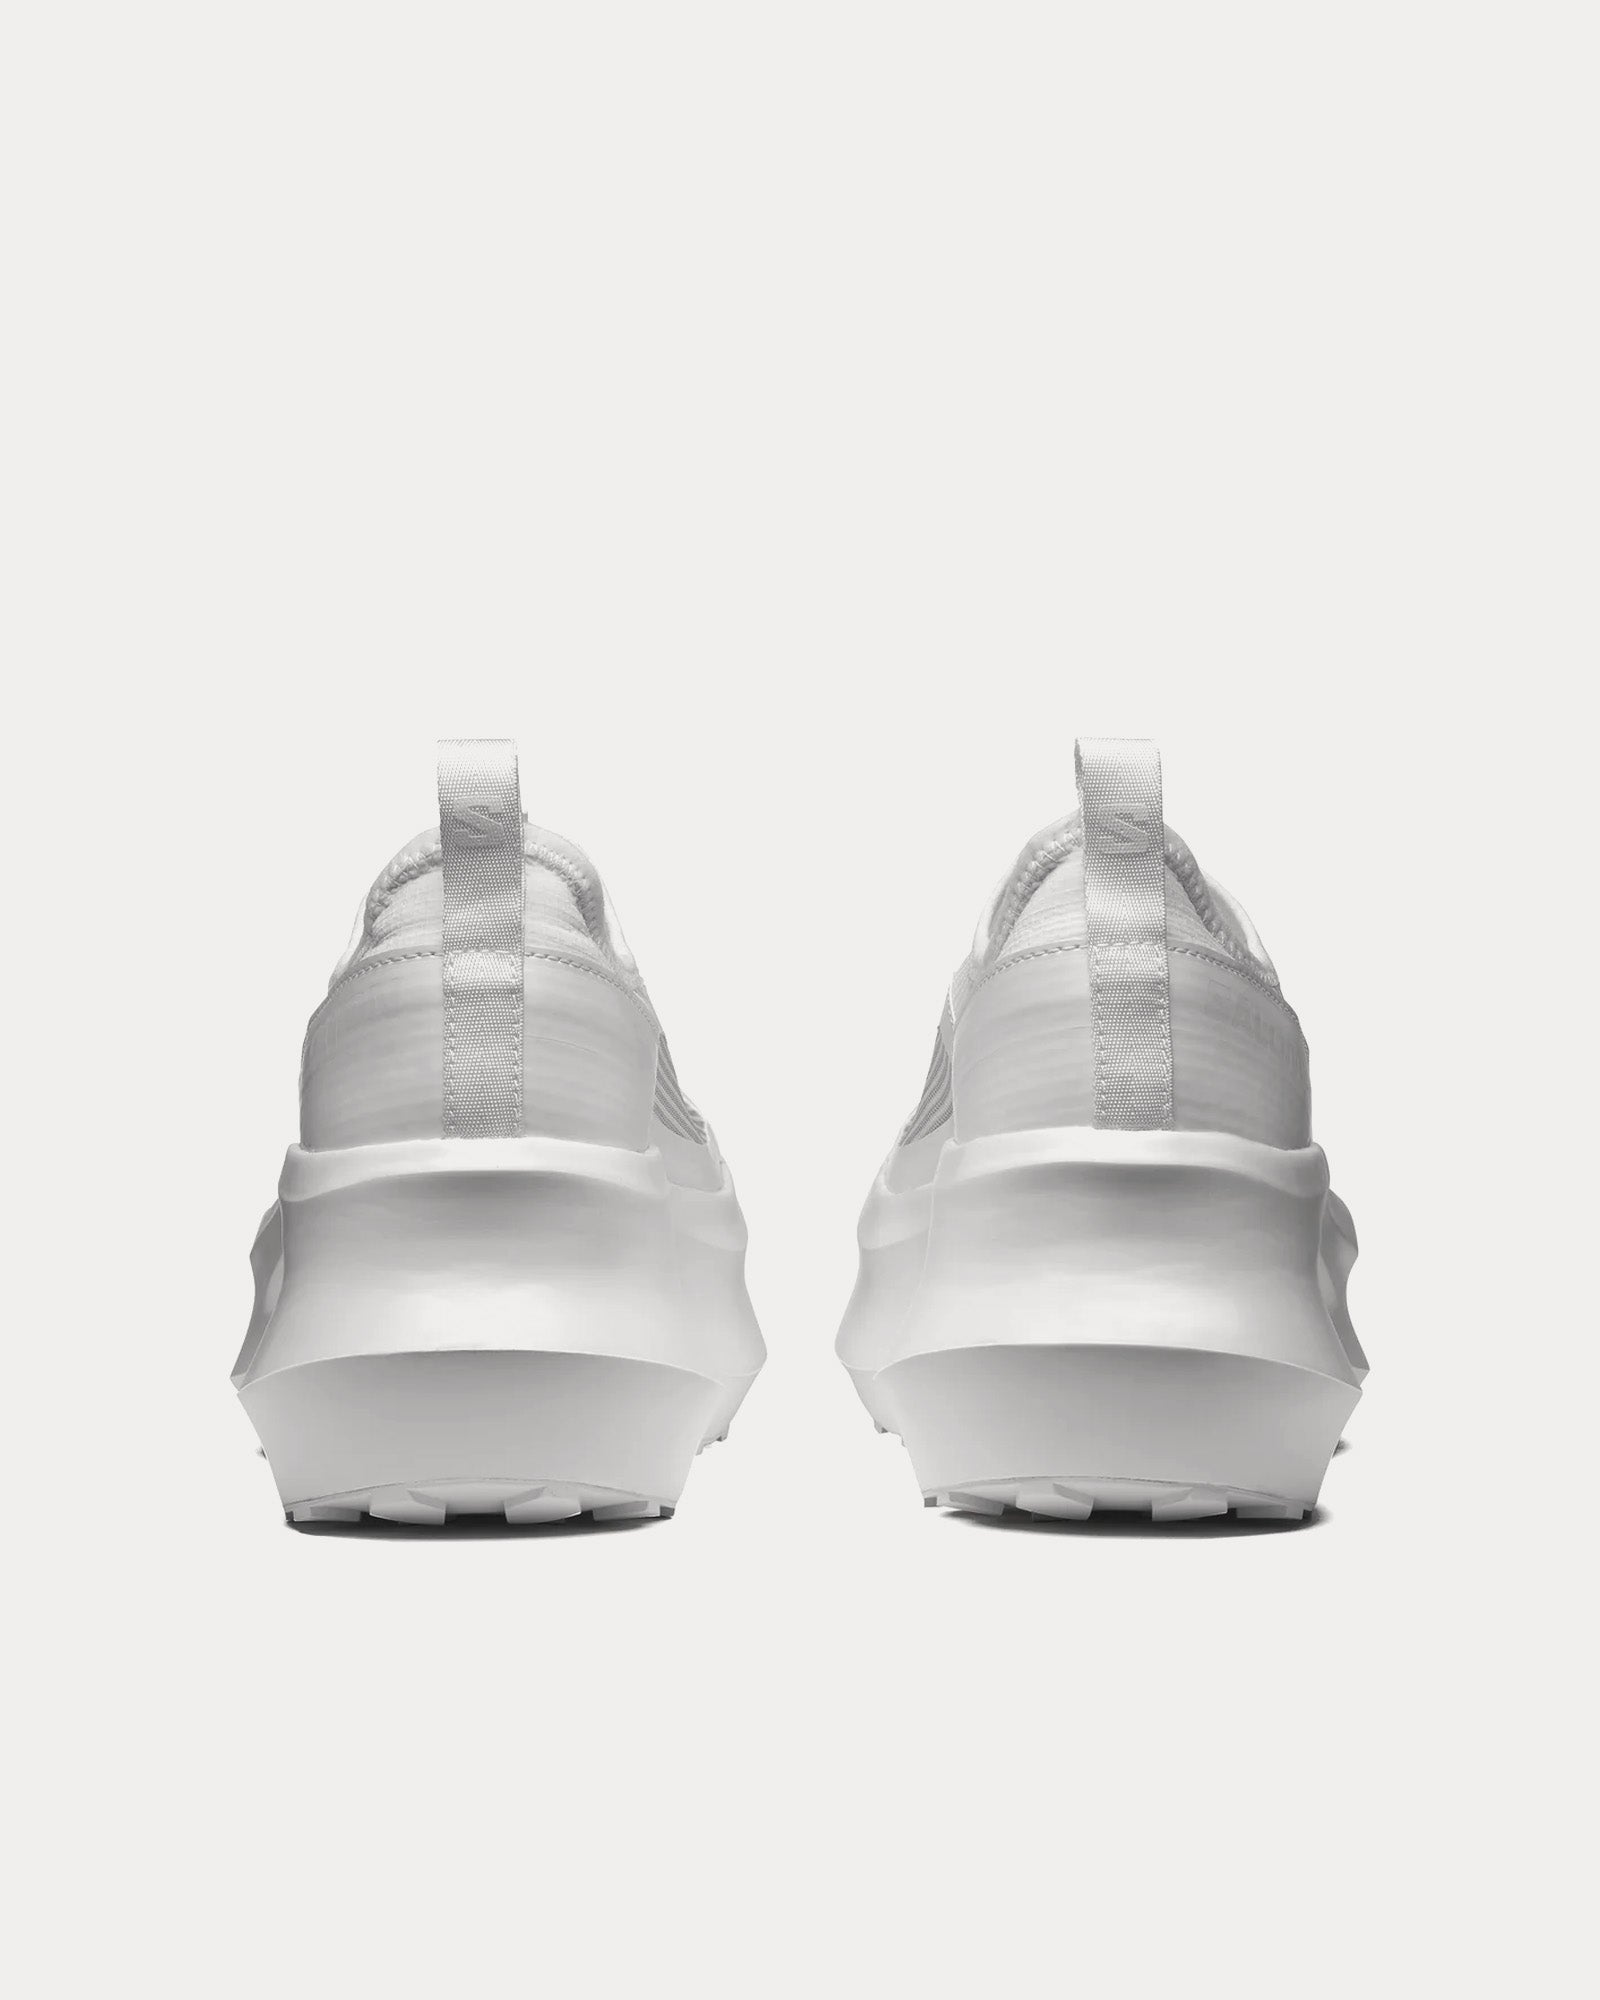 Salomon x Comme des Garçons - Platform White Slip On Sneakers